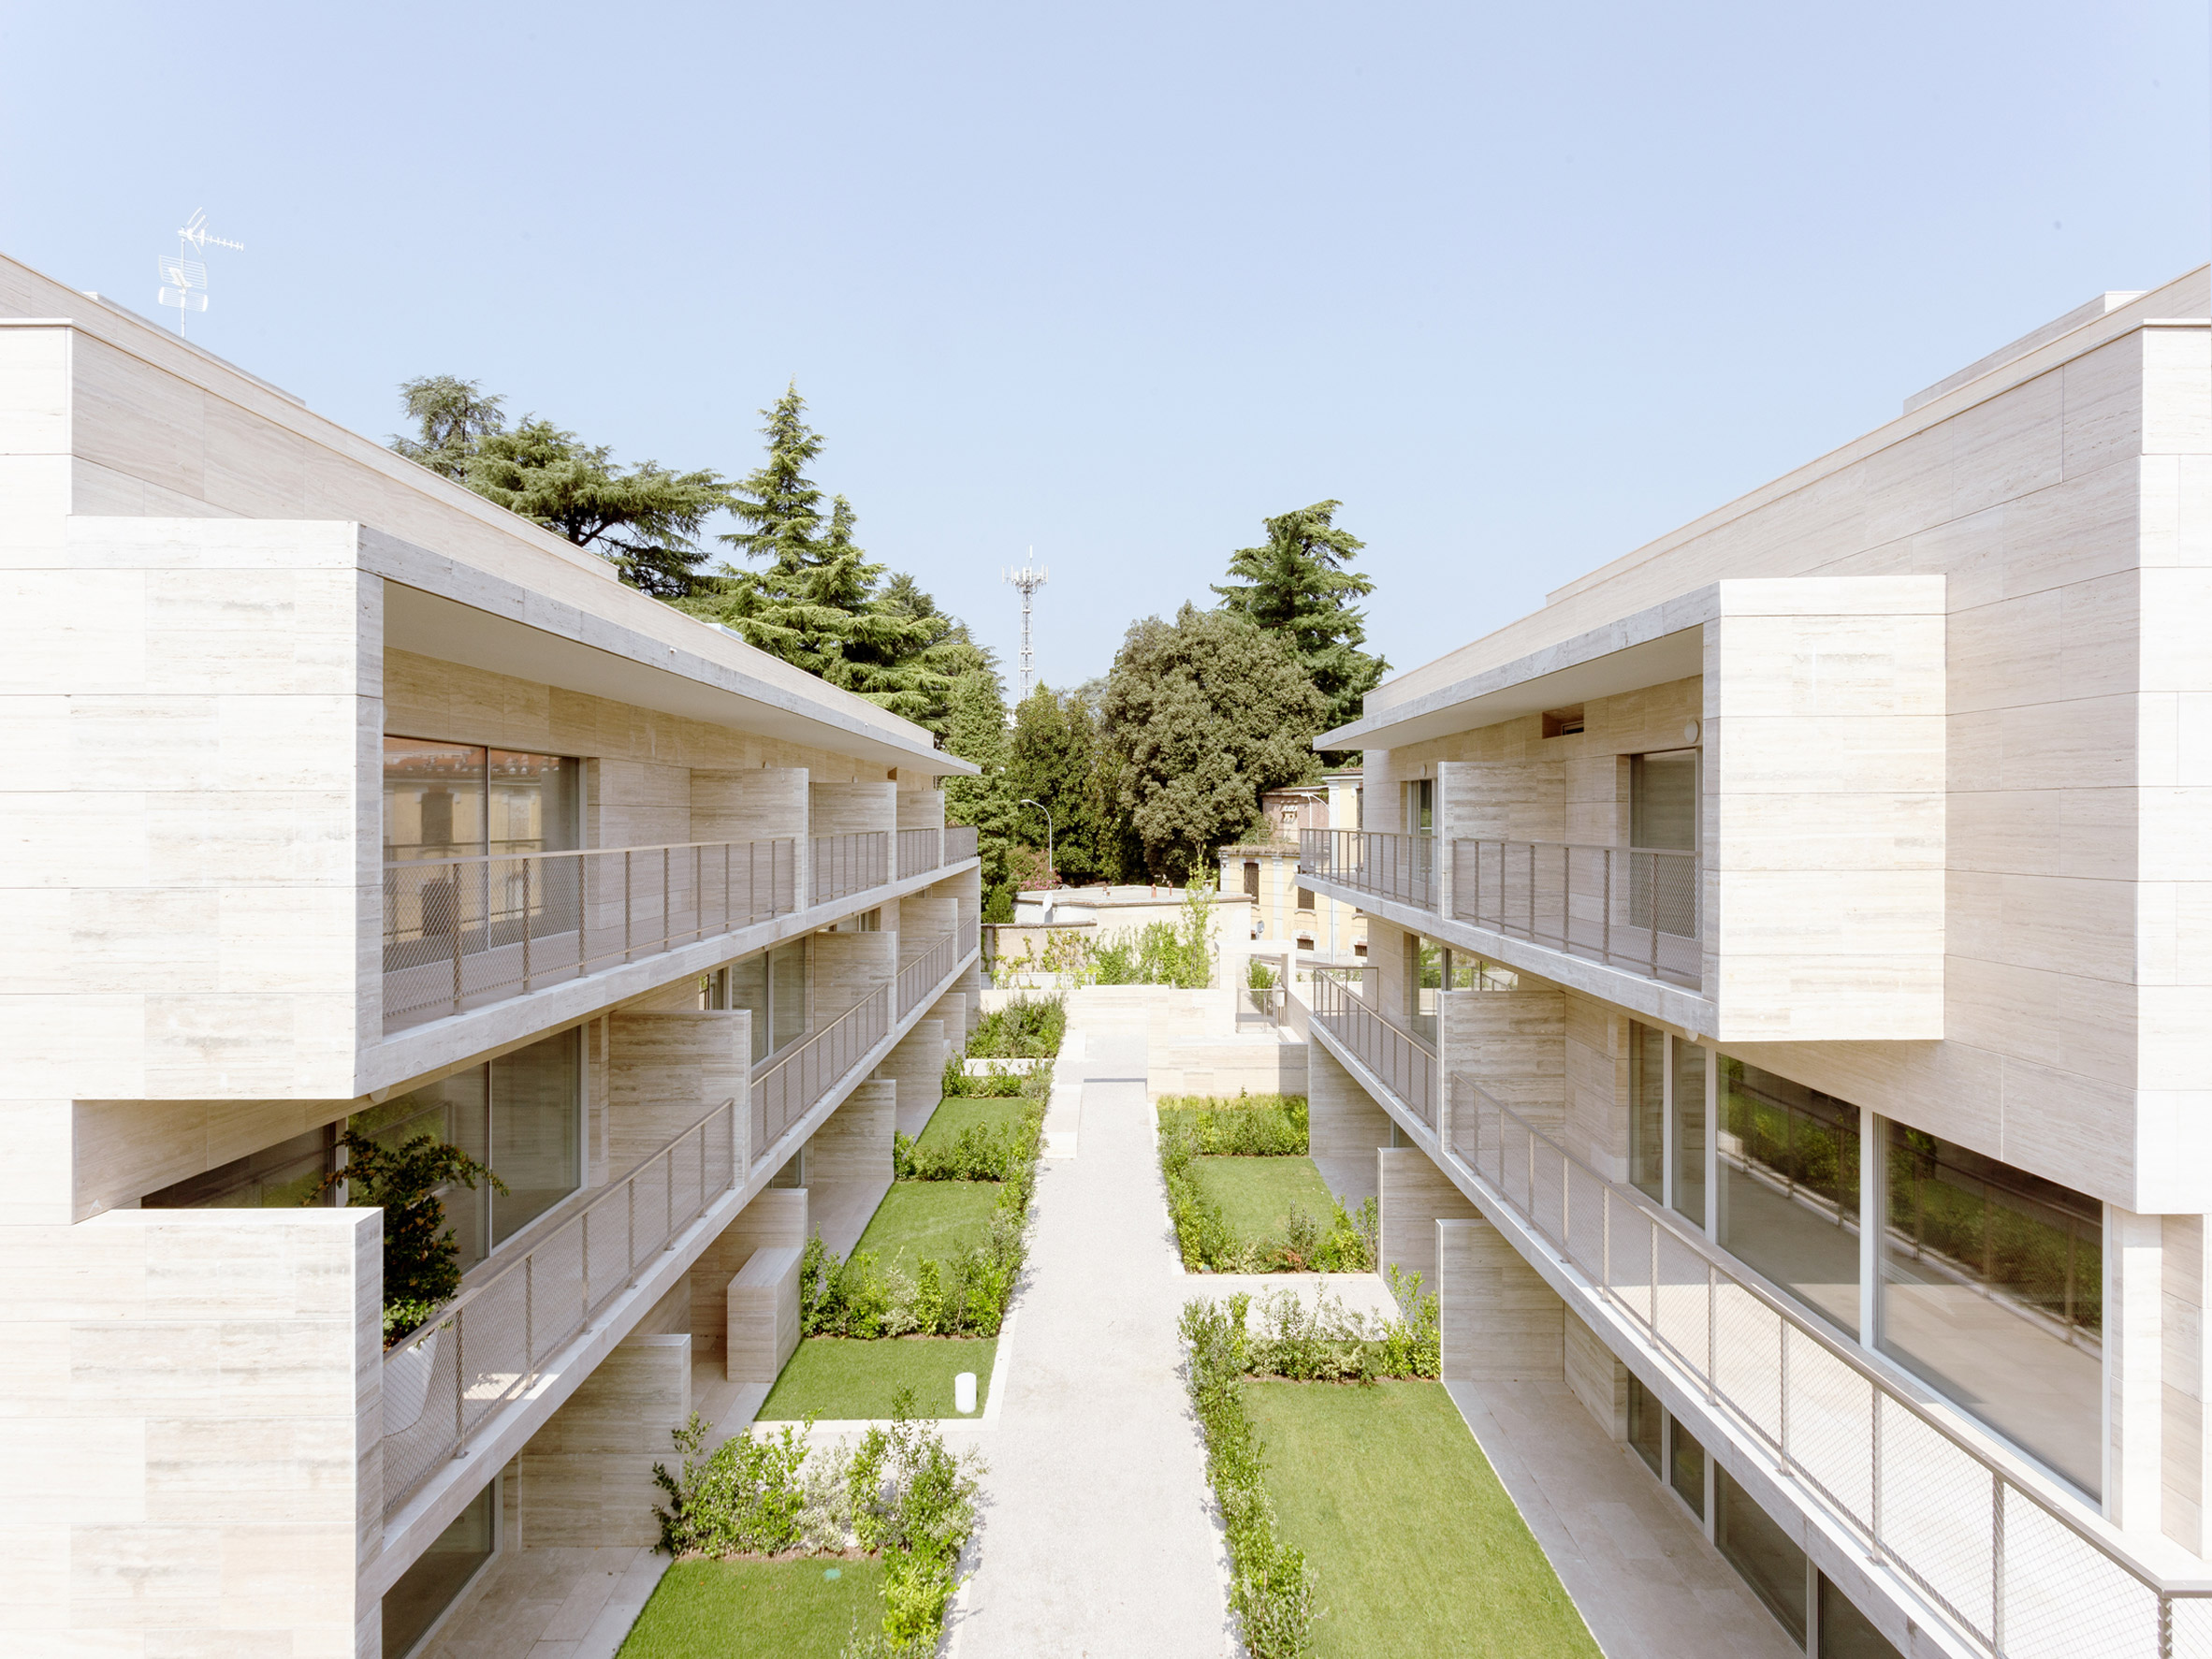 Gallarate housing by Álvaro Siza and COR Arquitectos